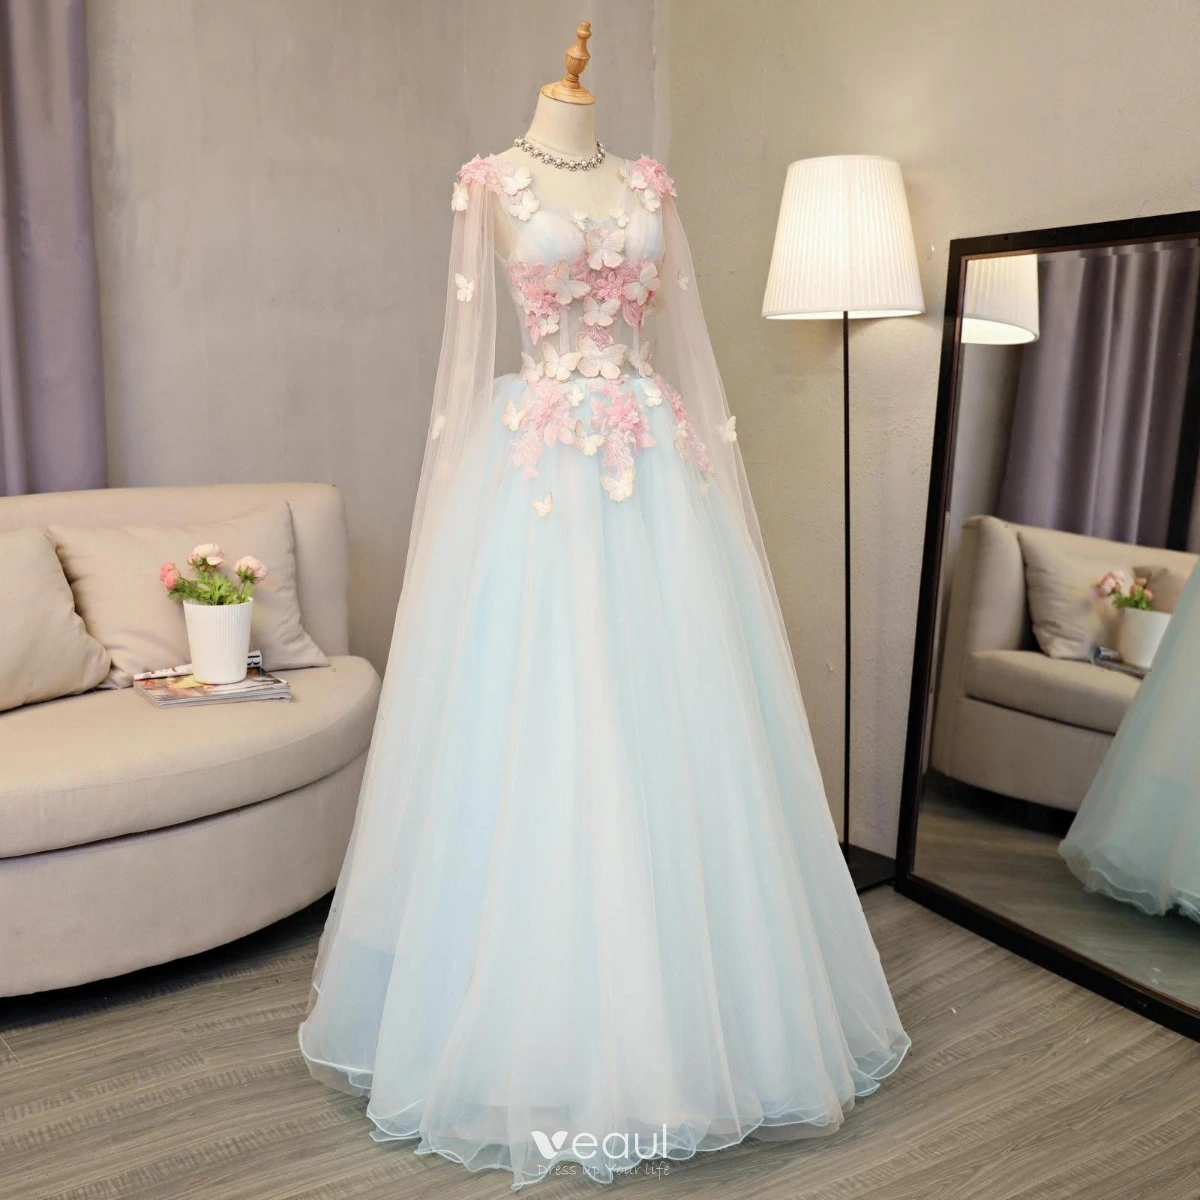 Sky Blue Long Prom Dresses Off Shoulder Princess Dress FD1163 viniodress -  Light Blue / US 2